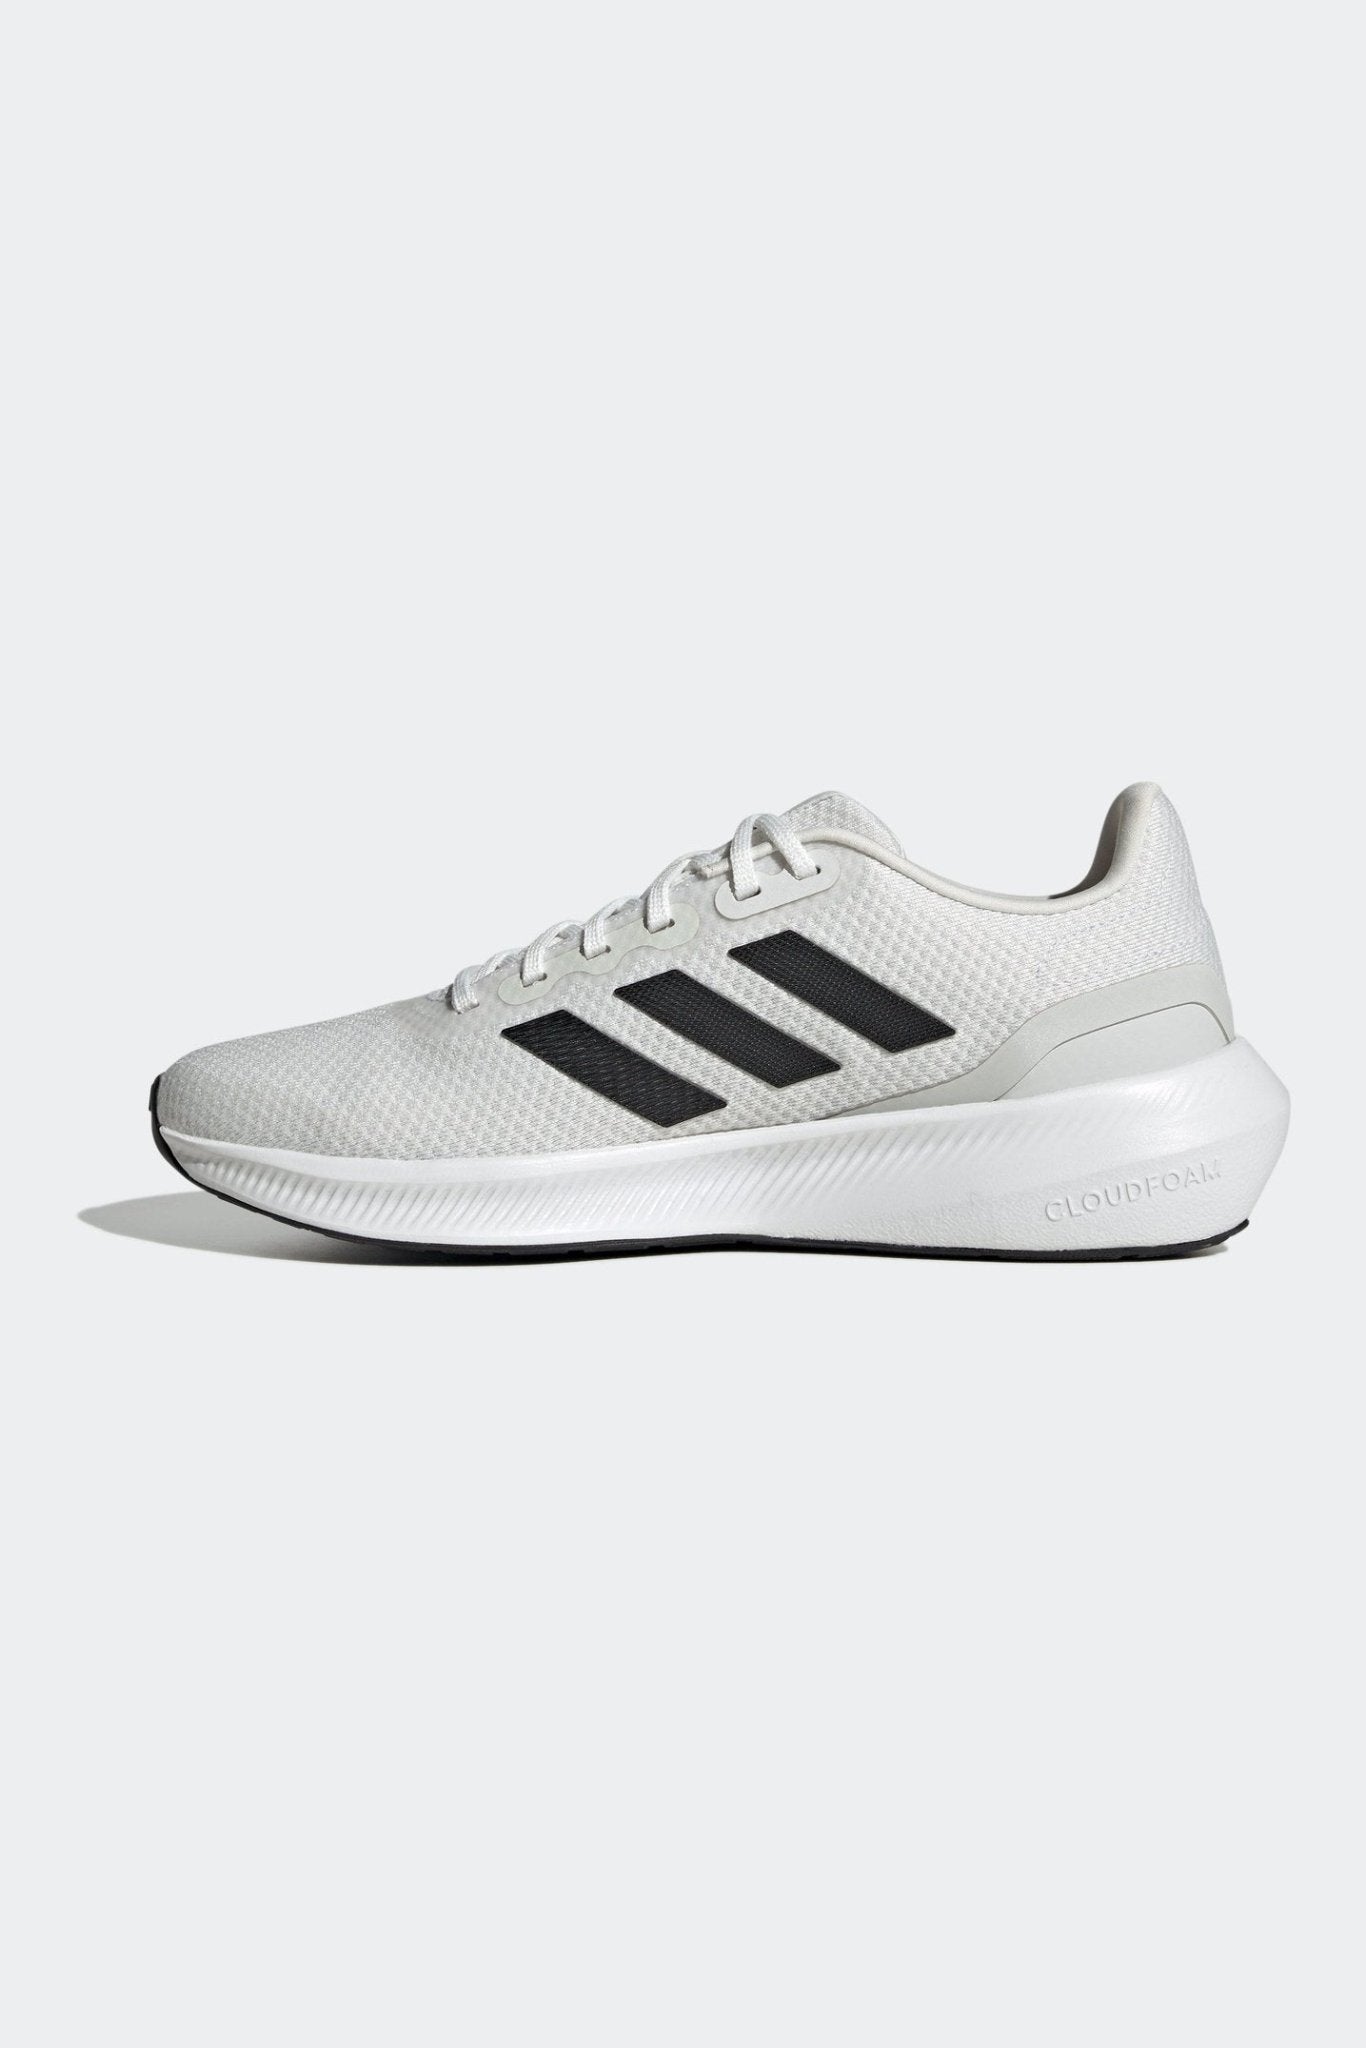 ADIDAS - נעלי ריצה לגברים RUNFALCON 3.0 בצבע לבן - MASHBIR//365